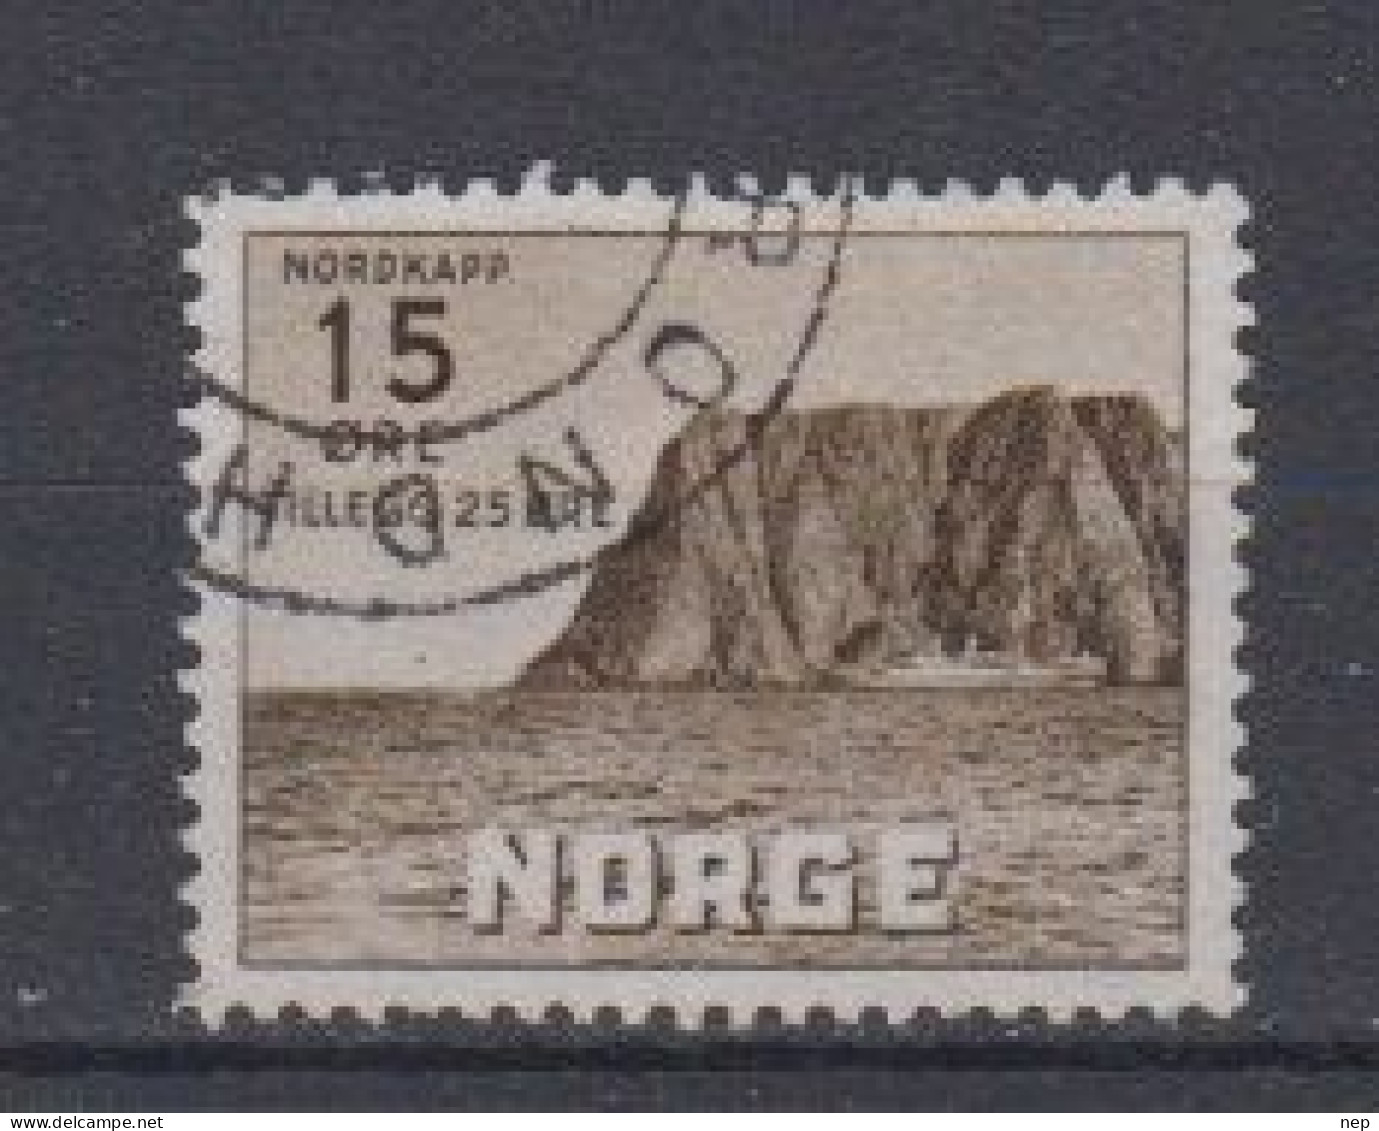 NOORWEGEN - Michel - 1943 - Nr 284 - Gest/Obl/Us - Usados